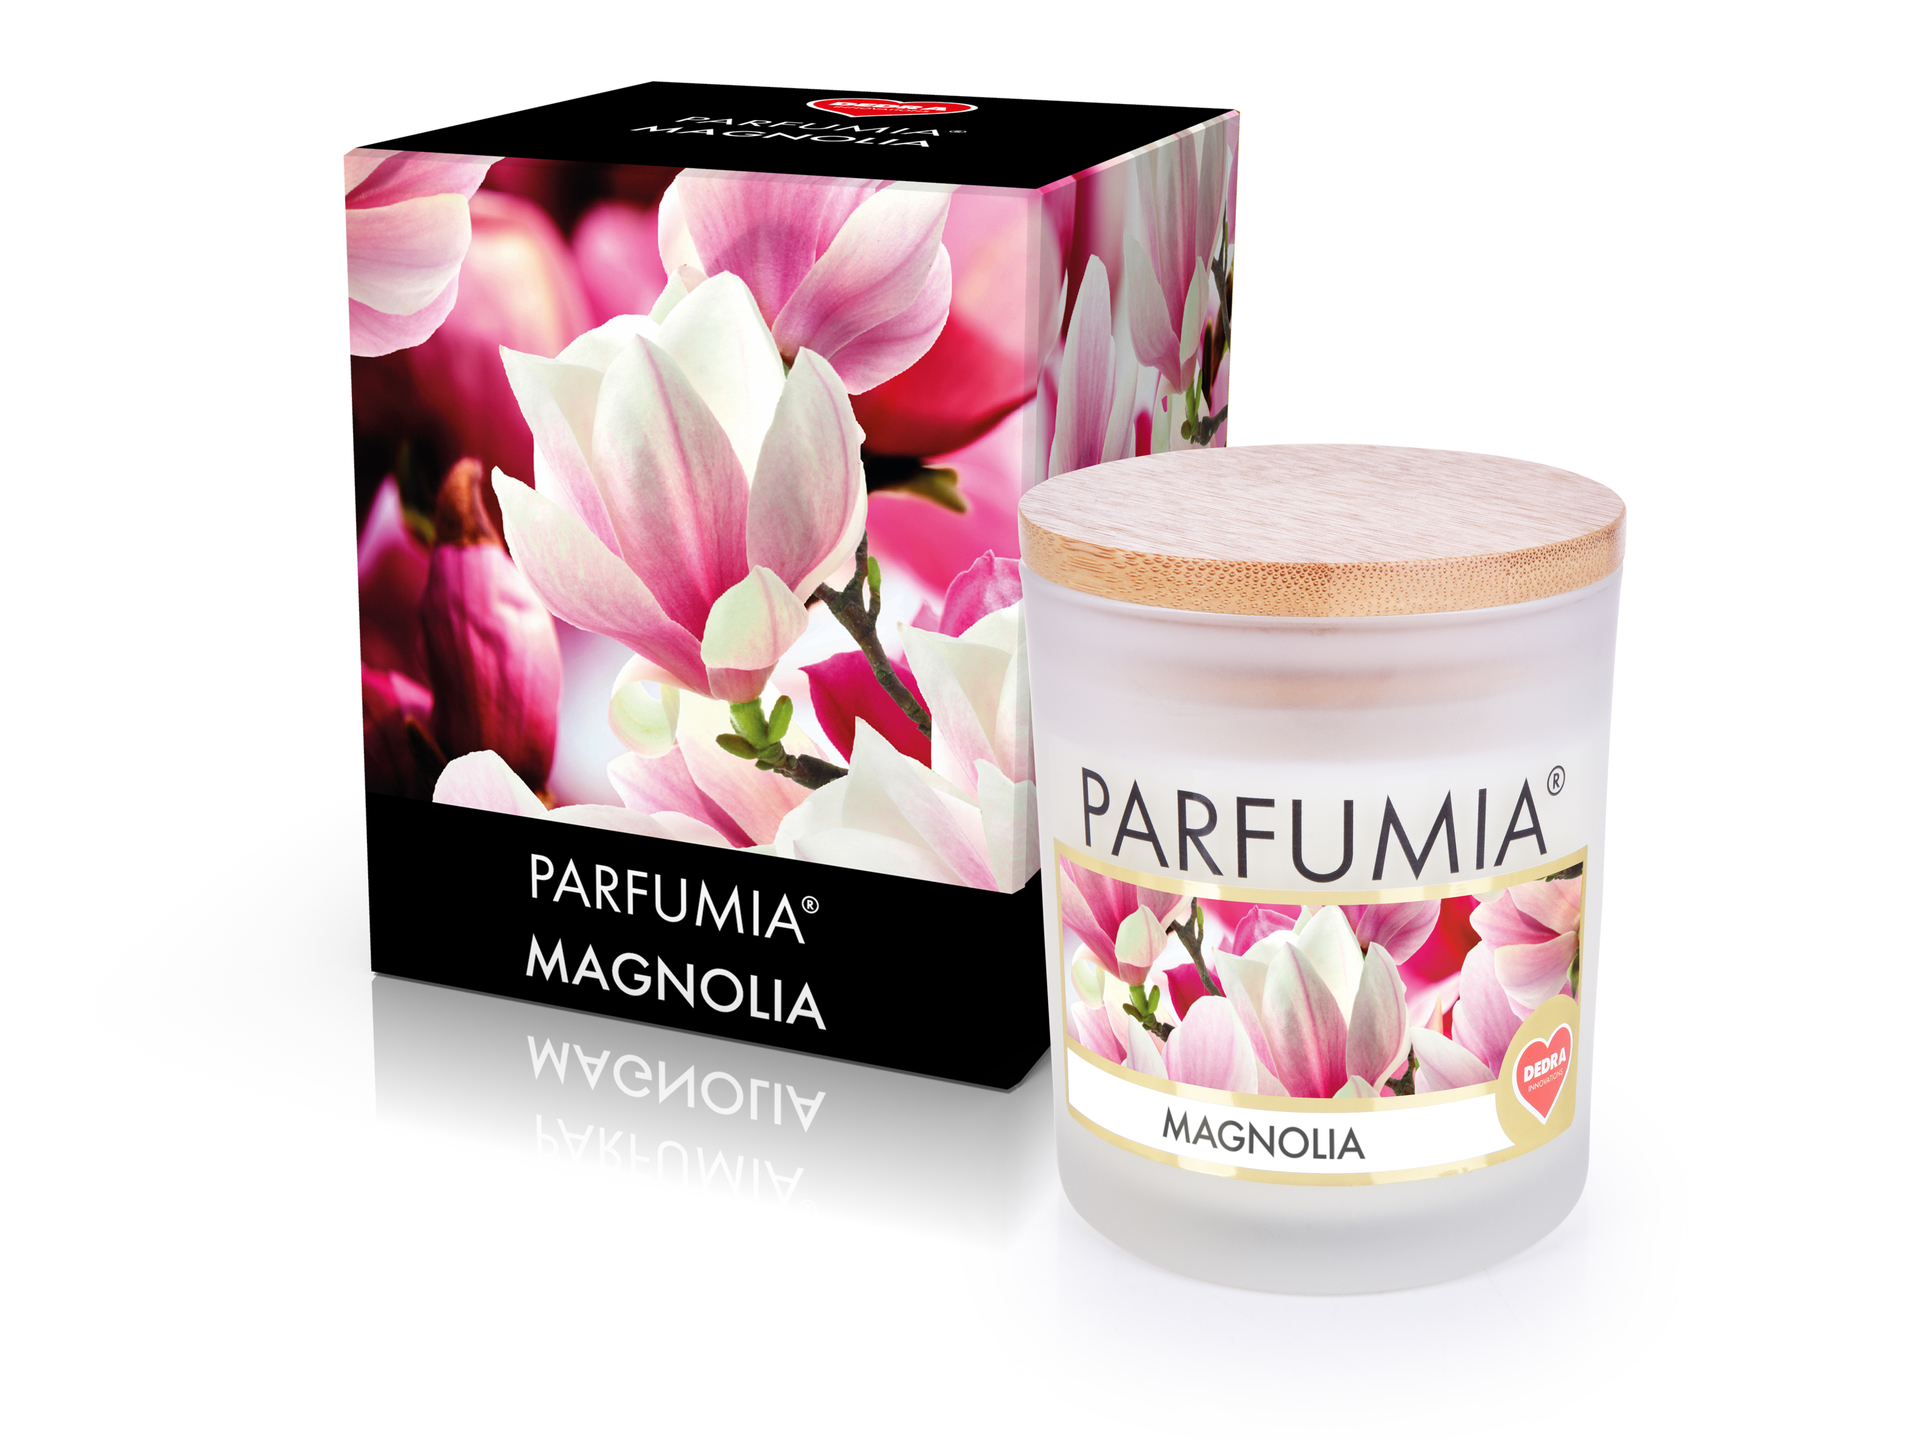 Sójová vonná EKO svíce Parfumia Magnolia